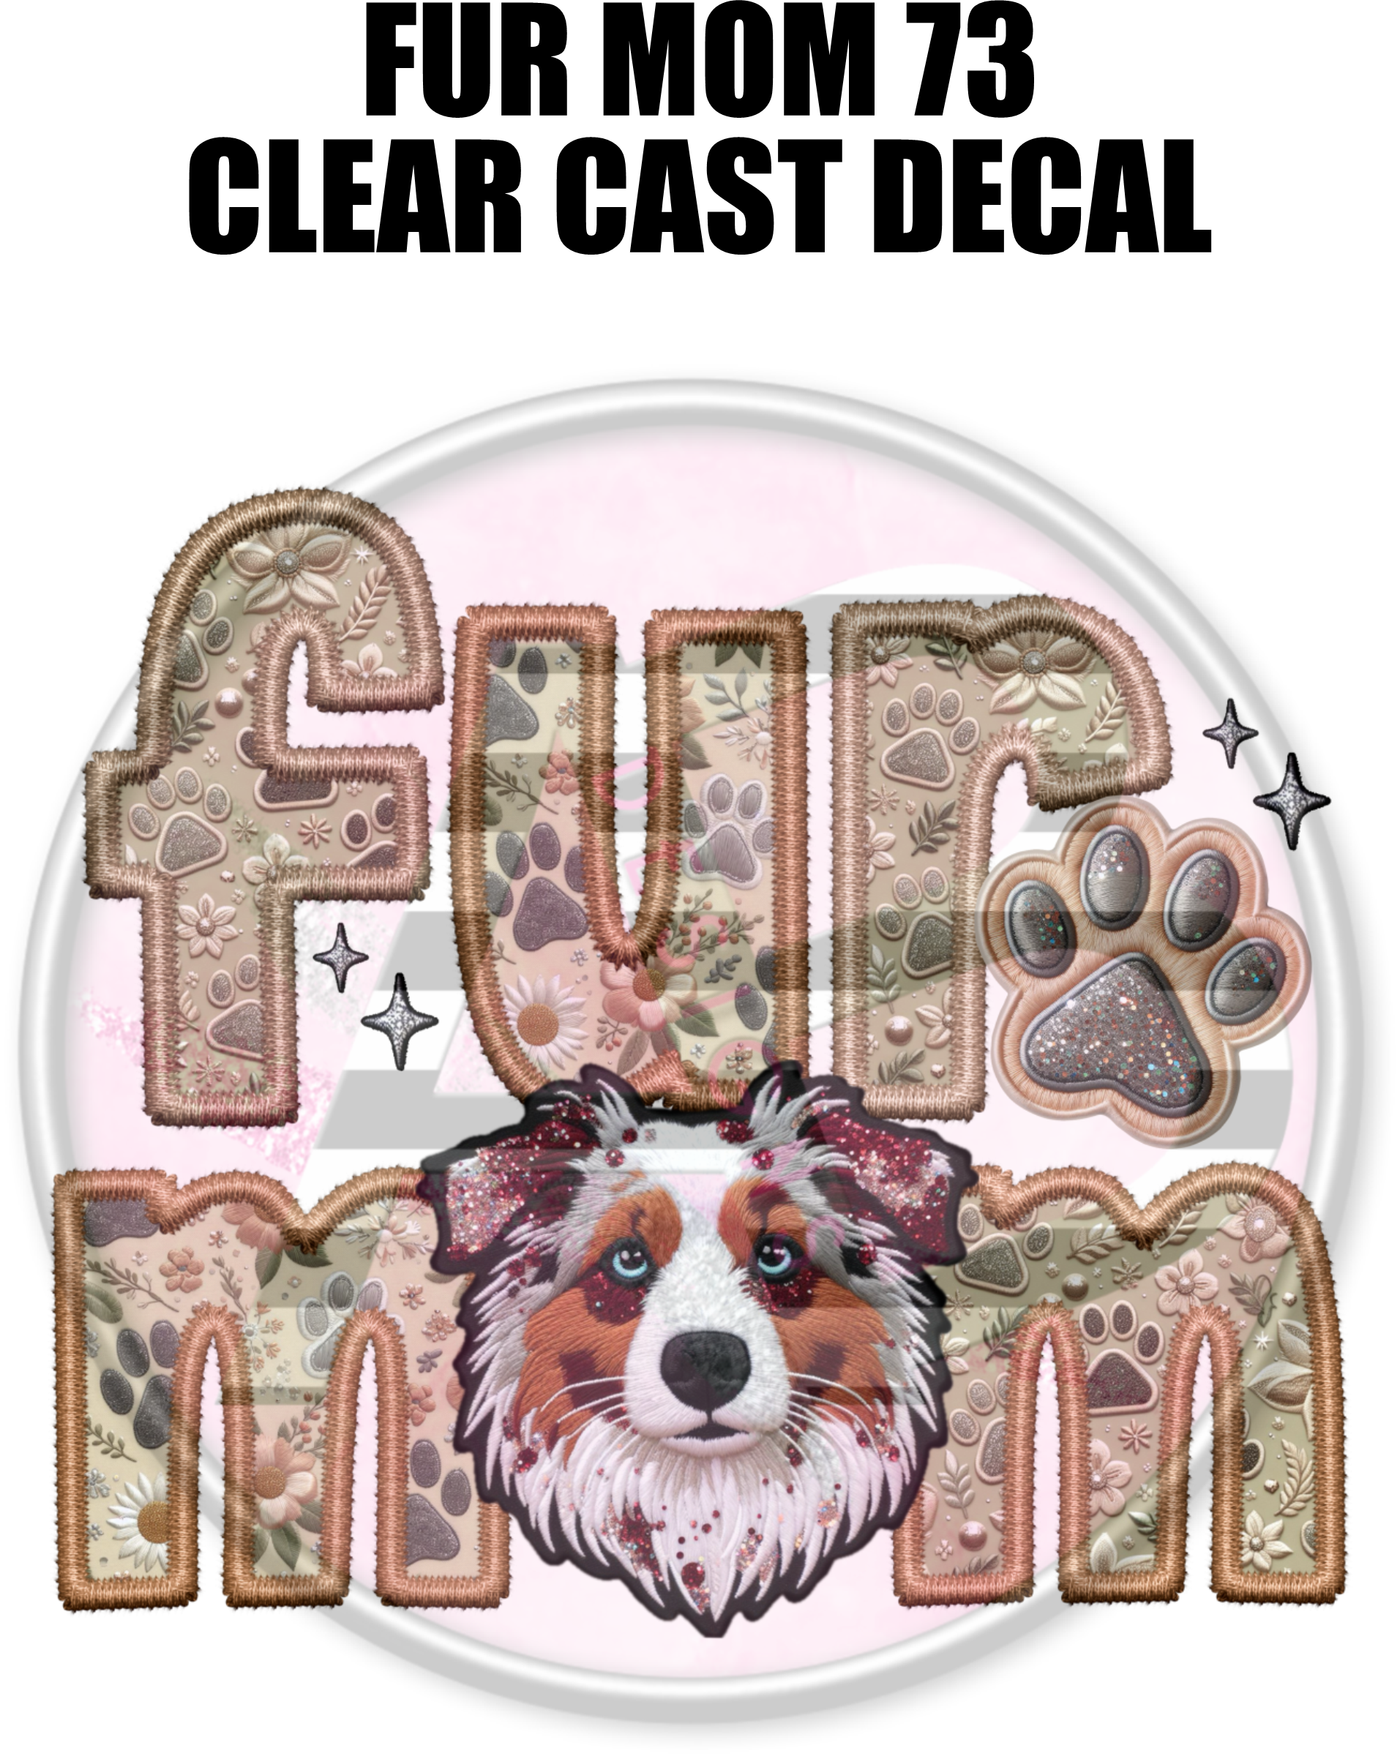 Fur Mom 73 - Clear Cast Decal